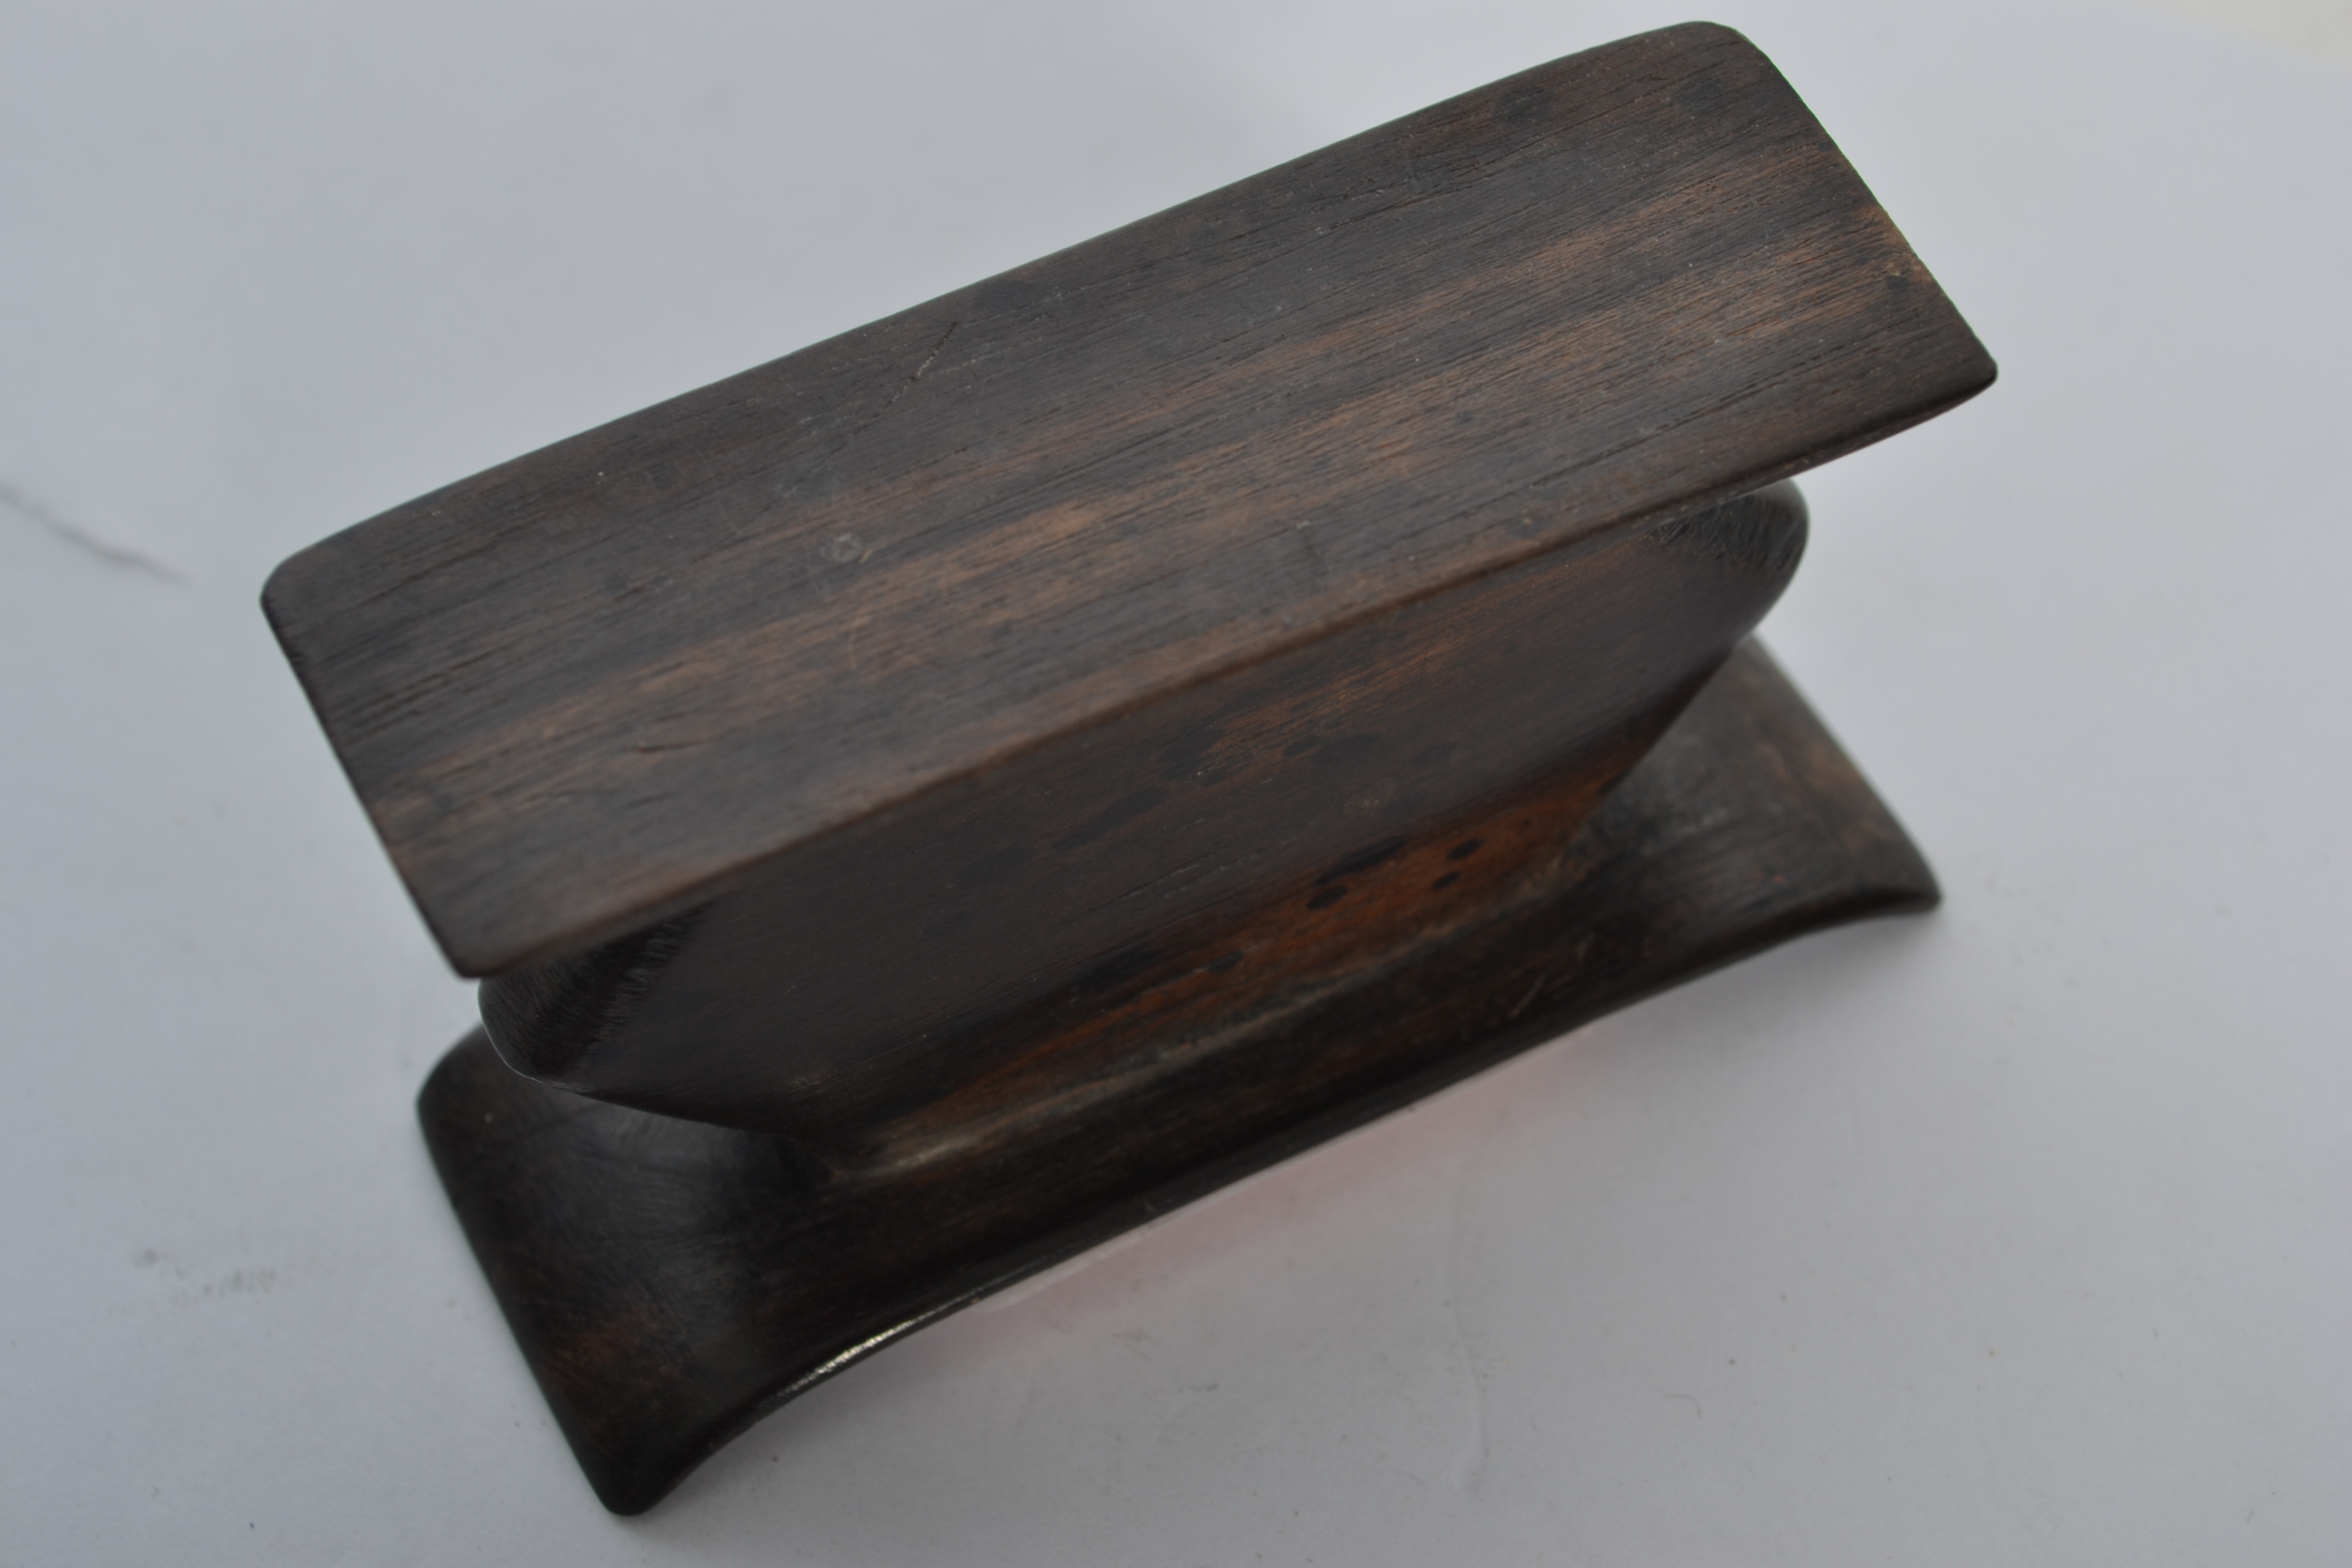 A 20th century hardwood miniature ashanti stool - - Image 3 of 3